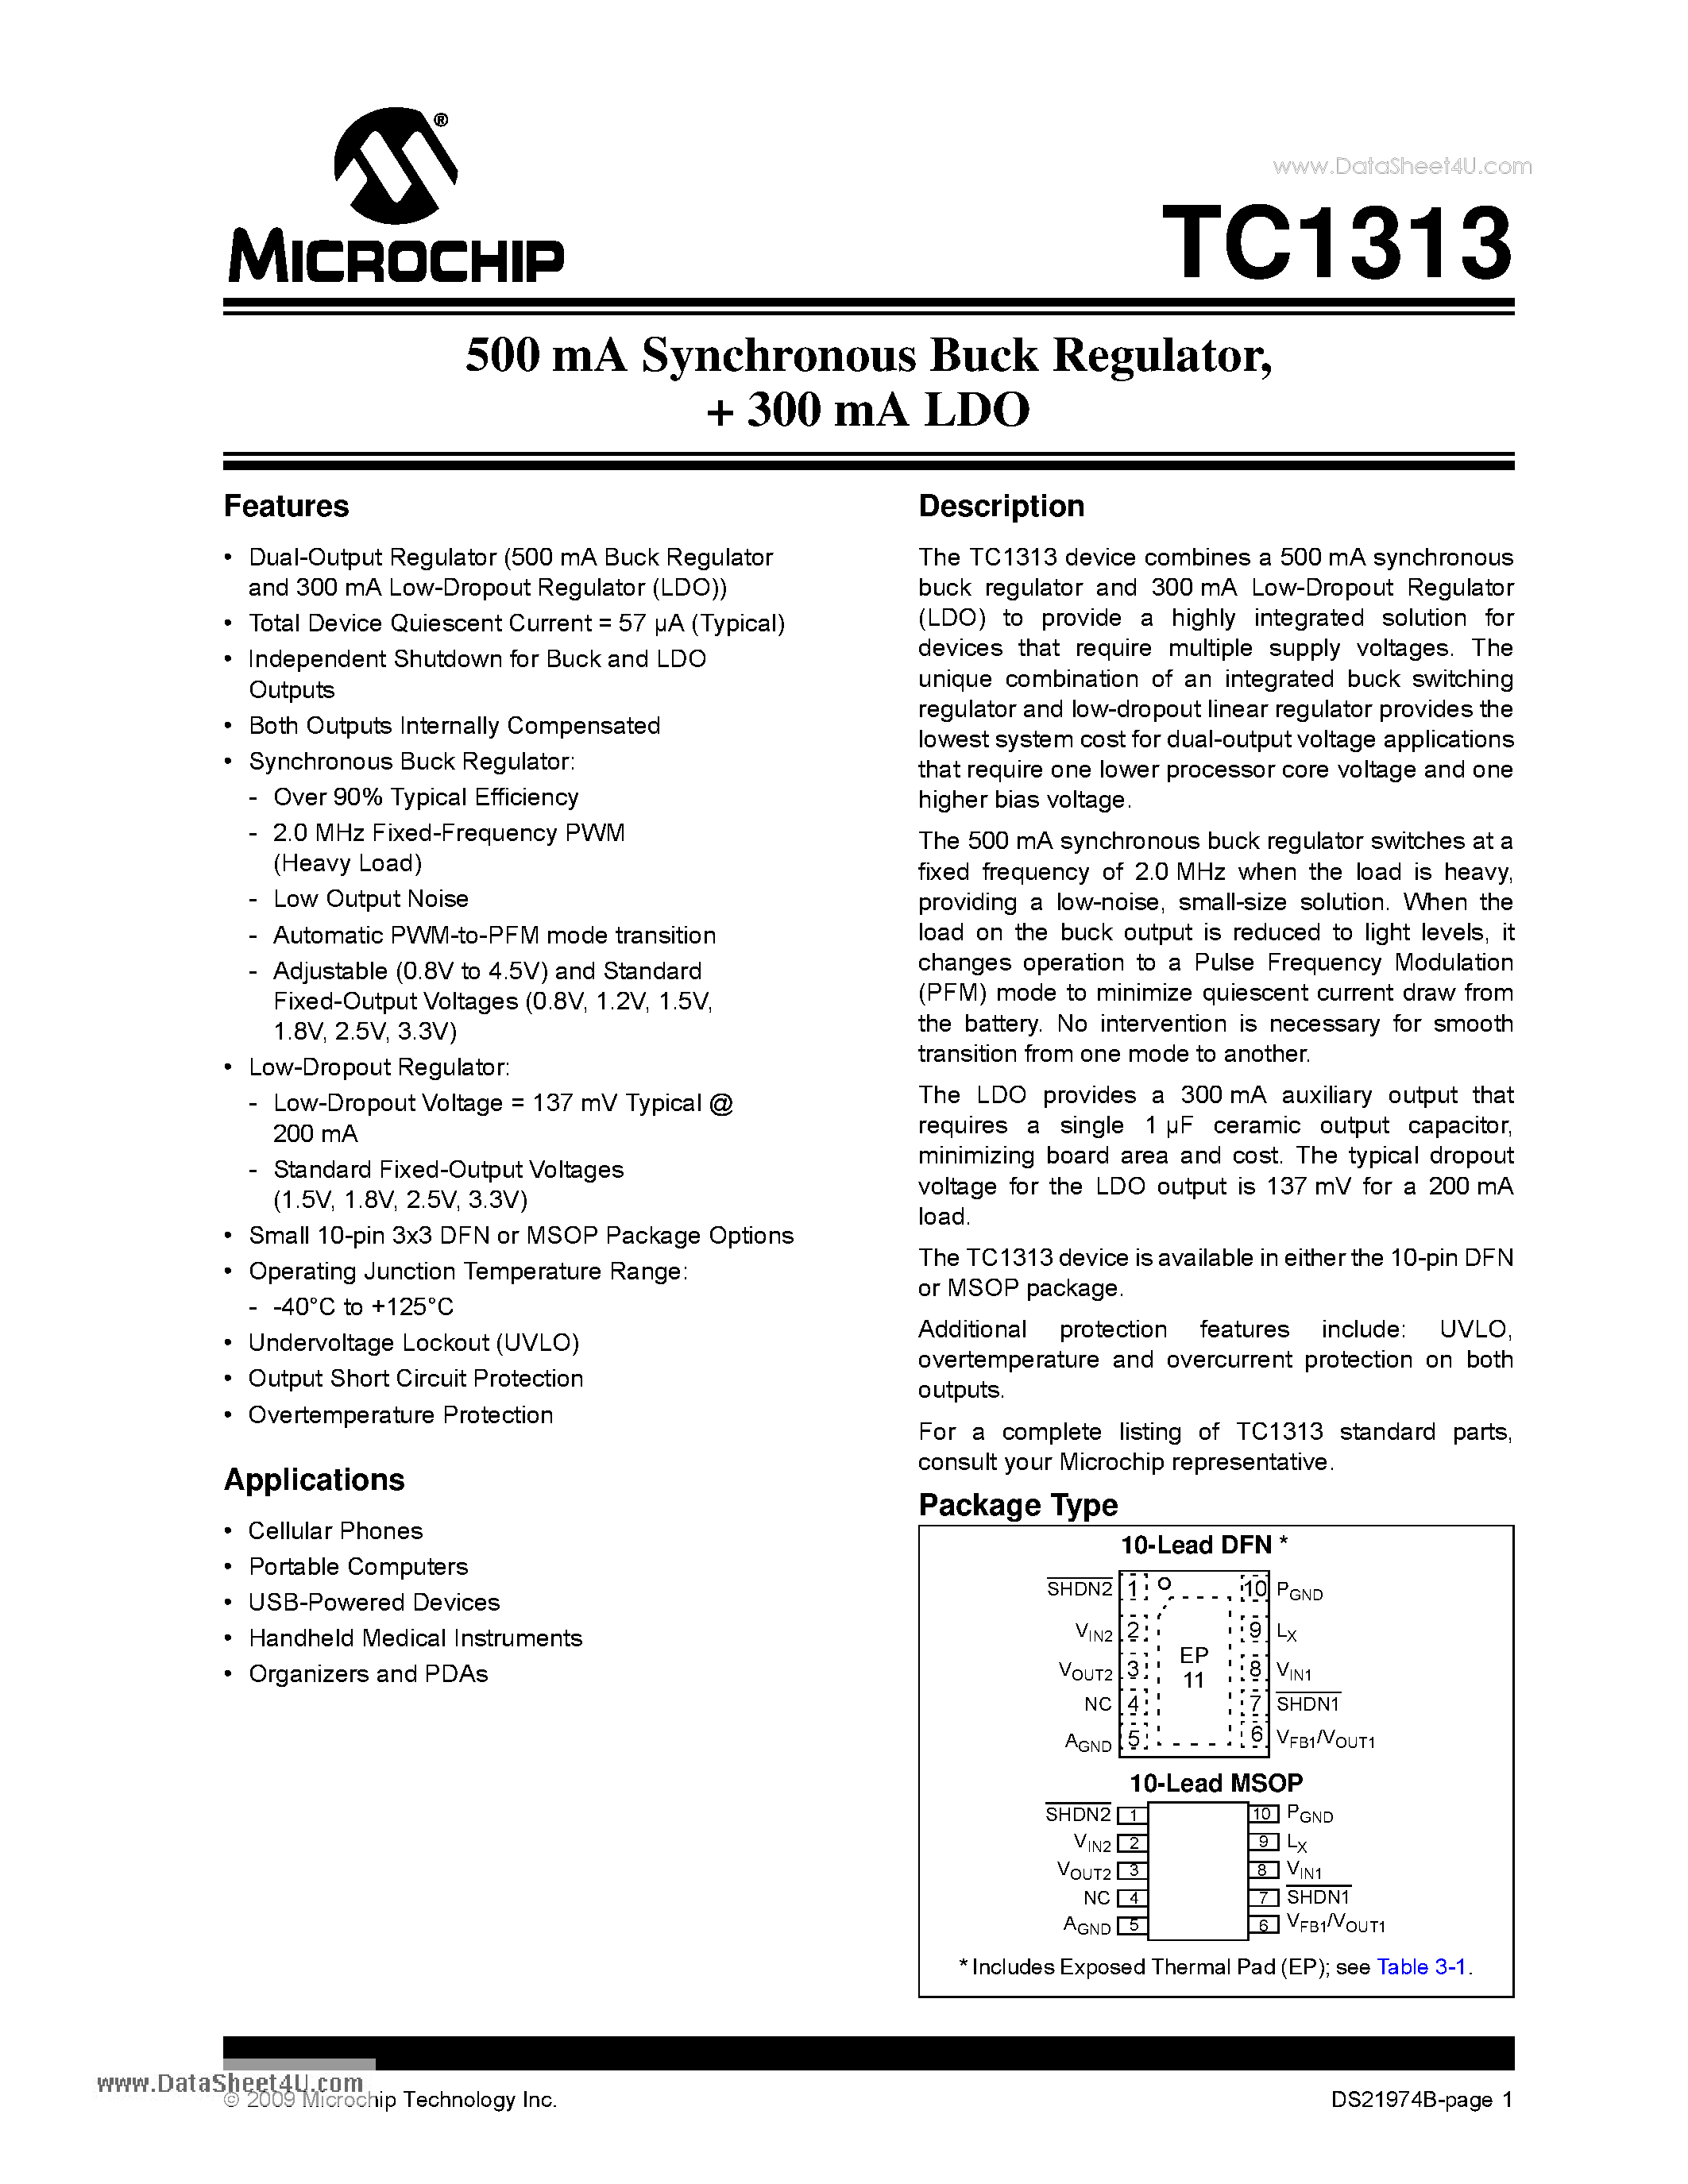 Datasheet TC1313 - 500 mA Synchronous Buck Regulator /+ 300 mA LDO page 1